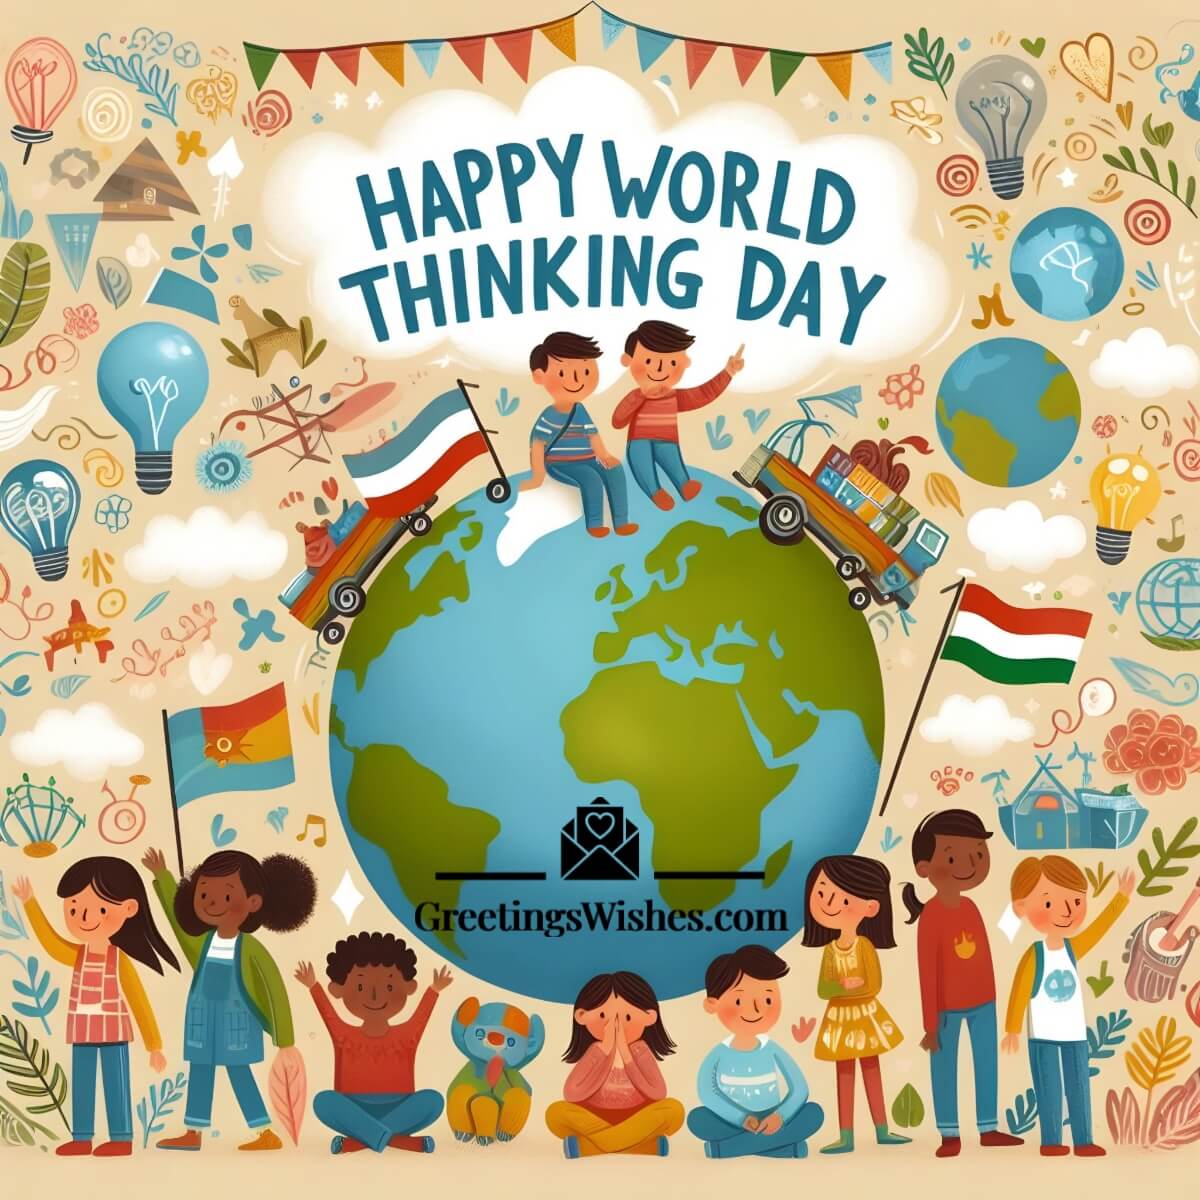 Happy World Thinking Day